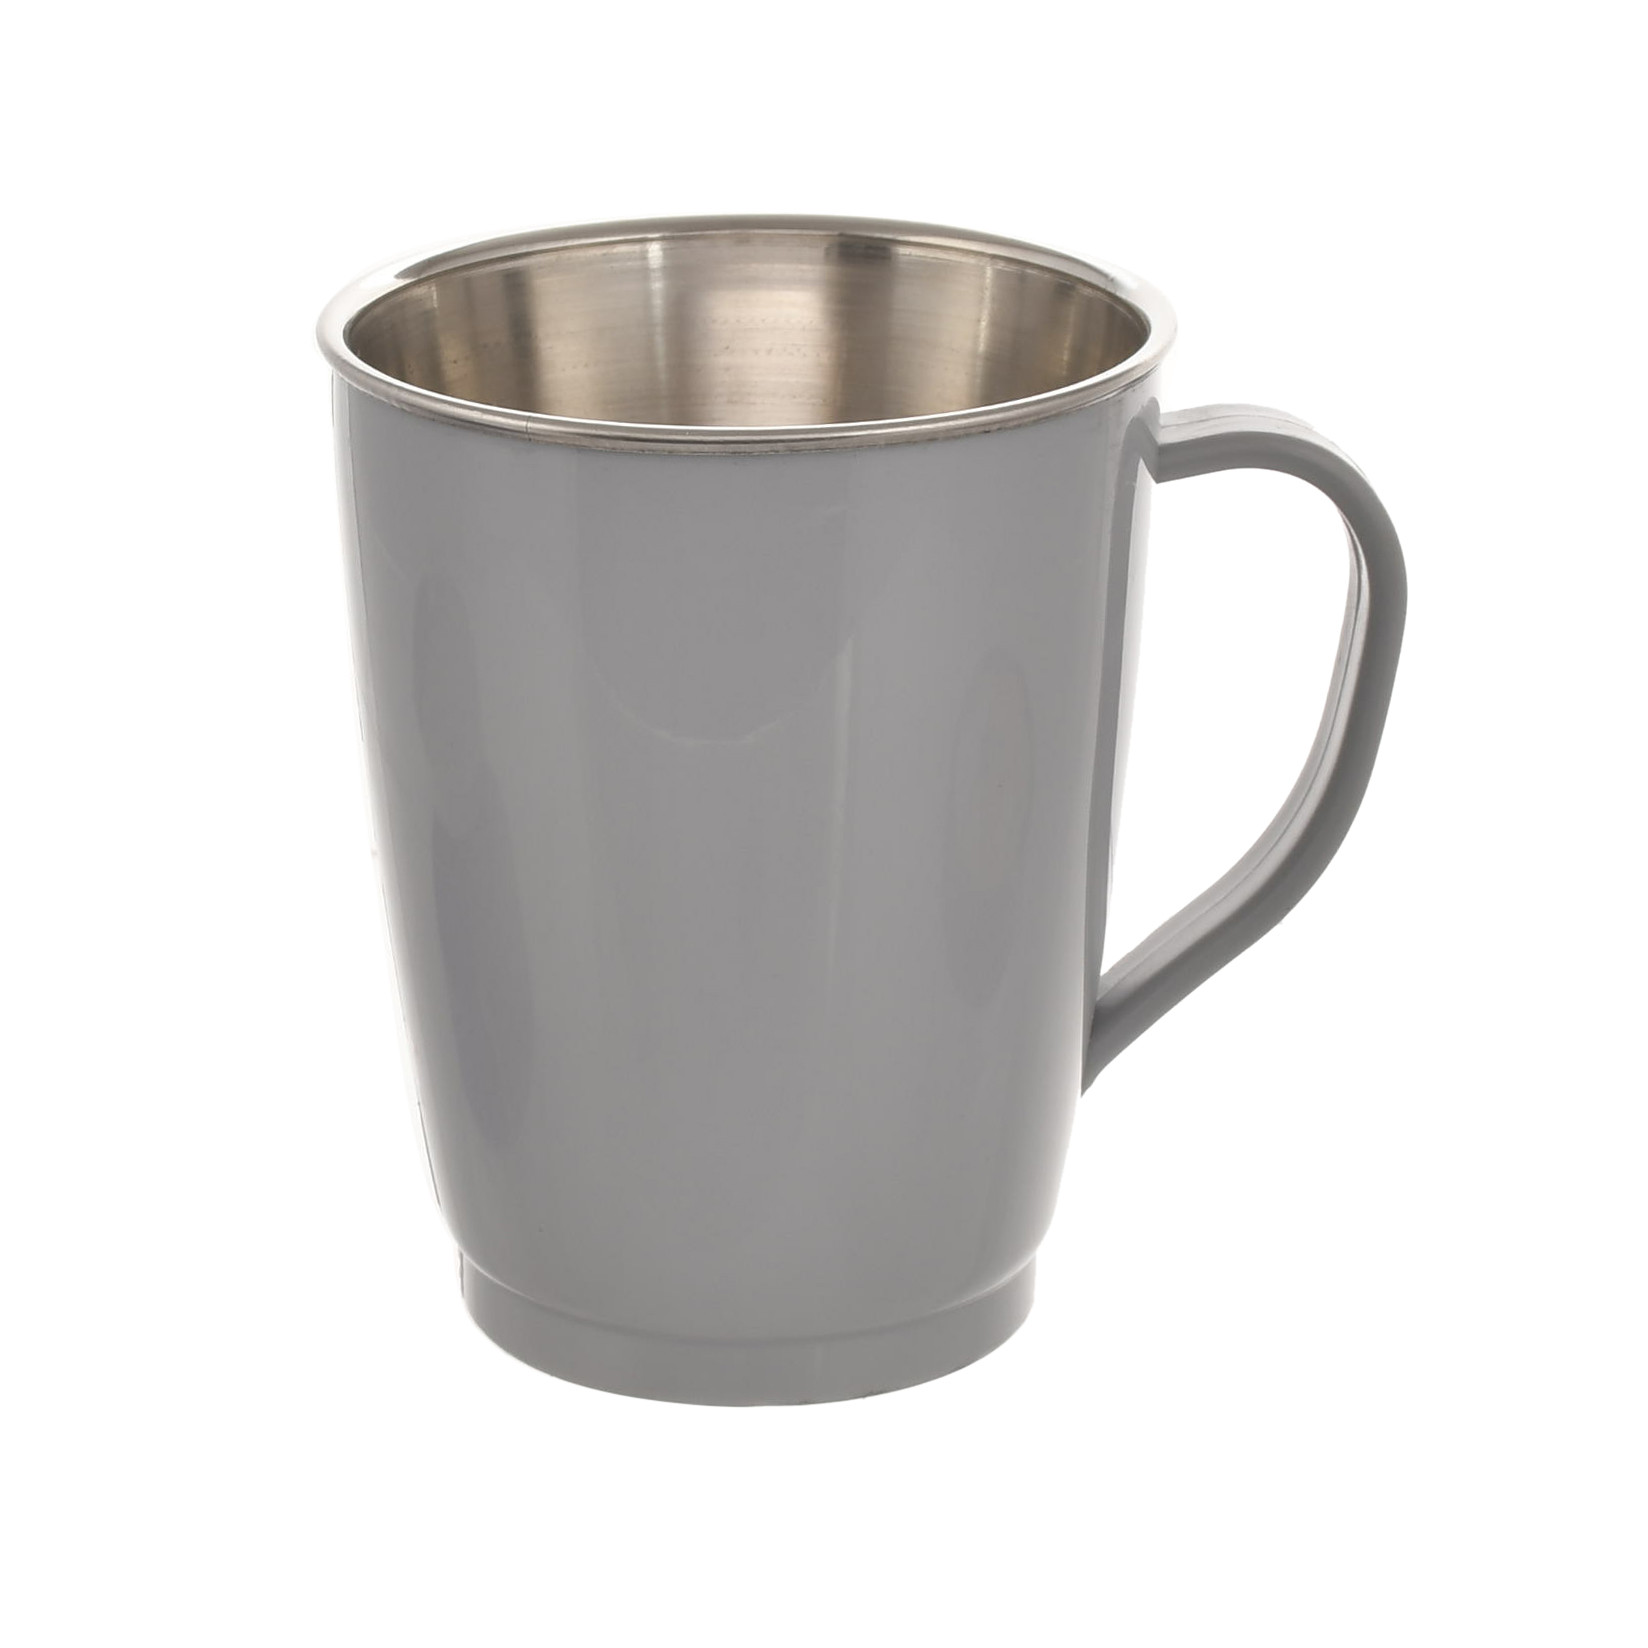 Kuber Industries Disney Printed Food Grade BPA Free Tea/Coffee Mug for Coffee Tea Cocoa, Camping Mugs with Lid, Pack of 6 (Light Grey & Grey)